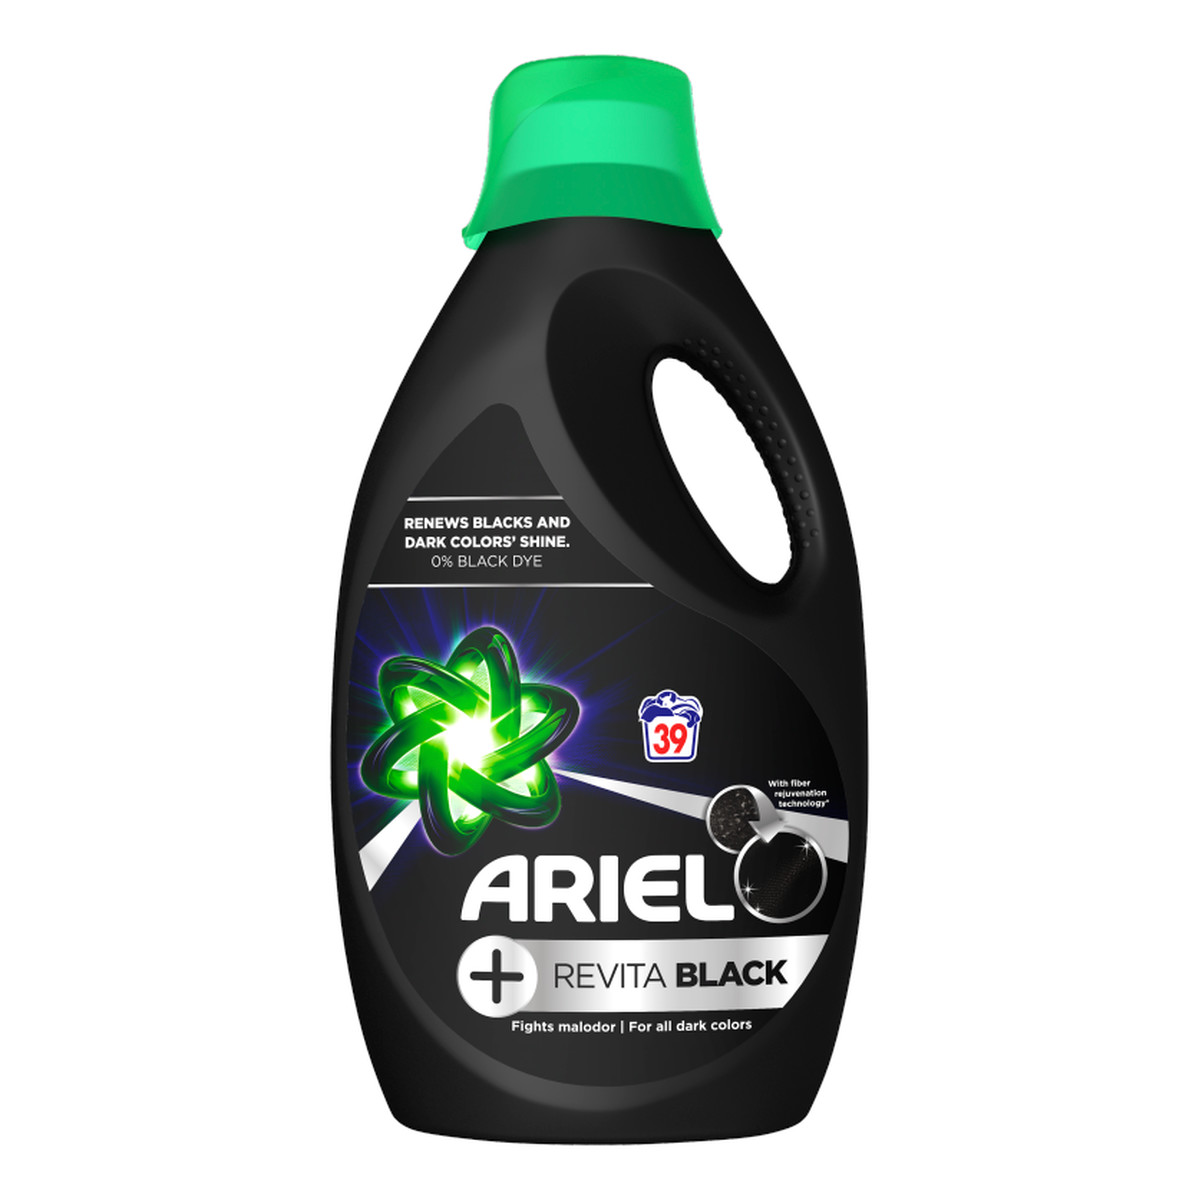 Ariel +Revita black Płyn do prania 39 prań 2145ml